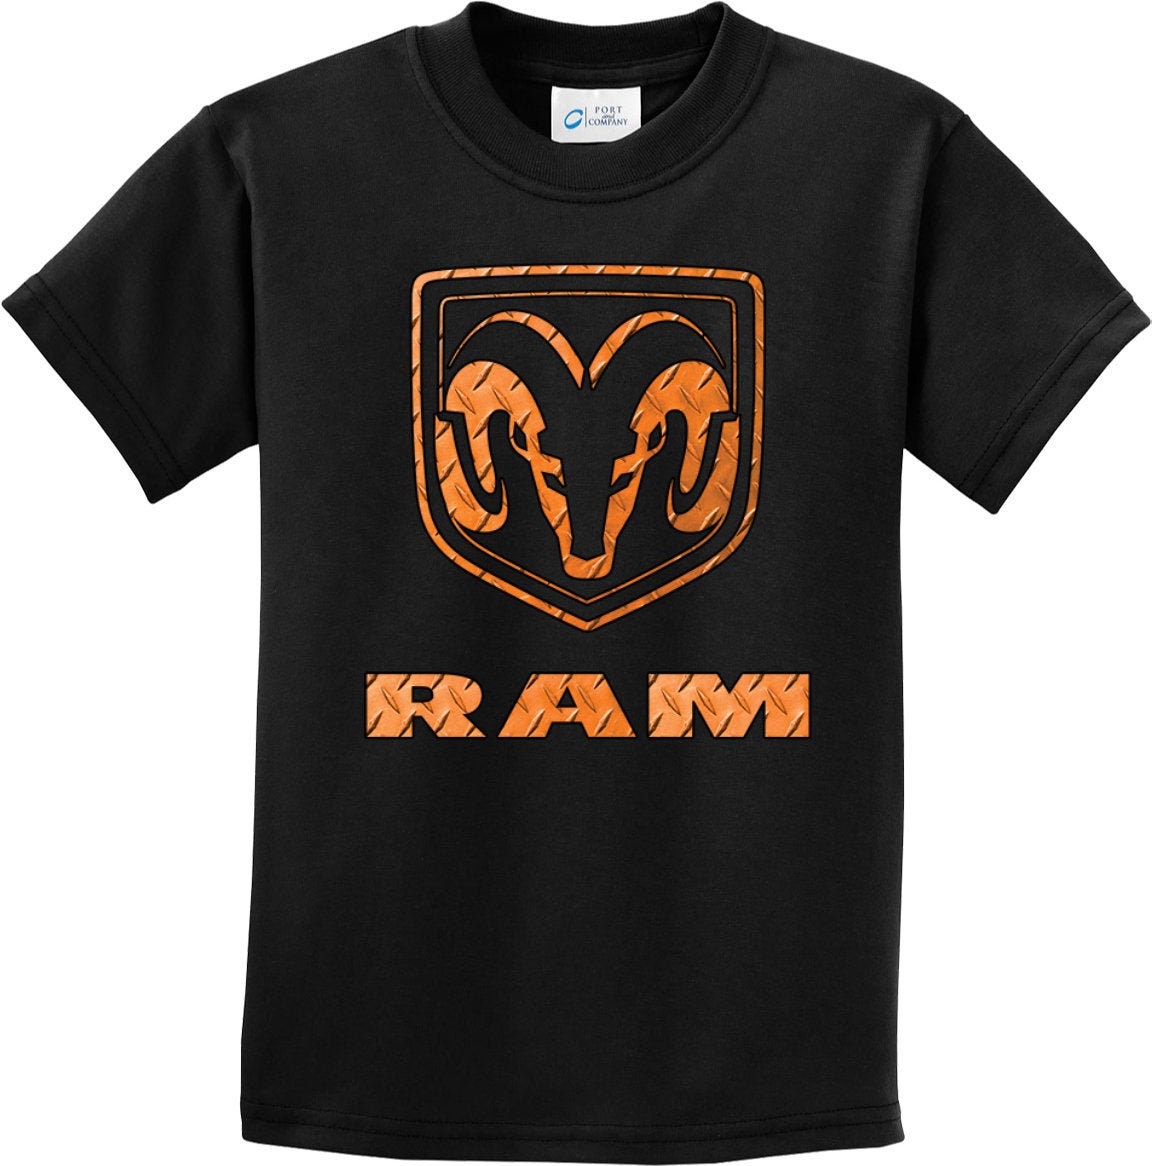 Kid's Dodge Ram Diamond Plate Logo Tee T-Shirt 21540Hd2-Pc61Y